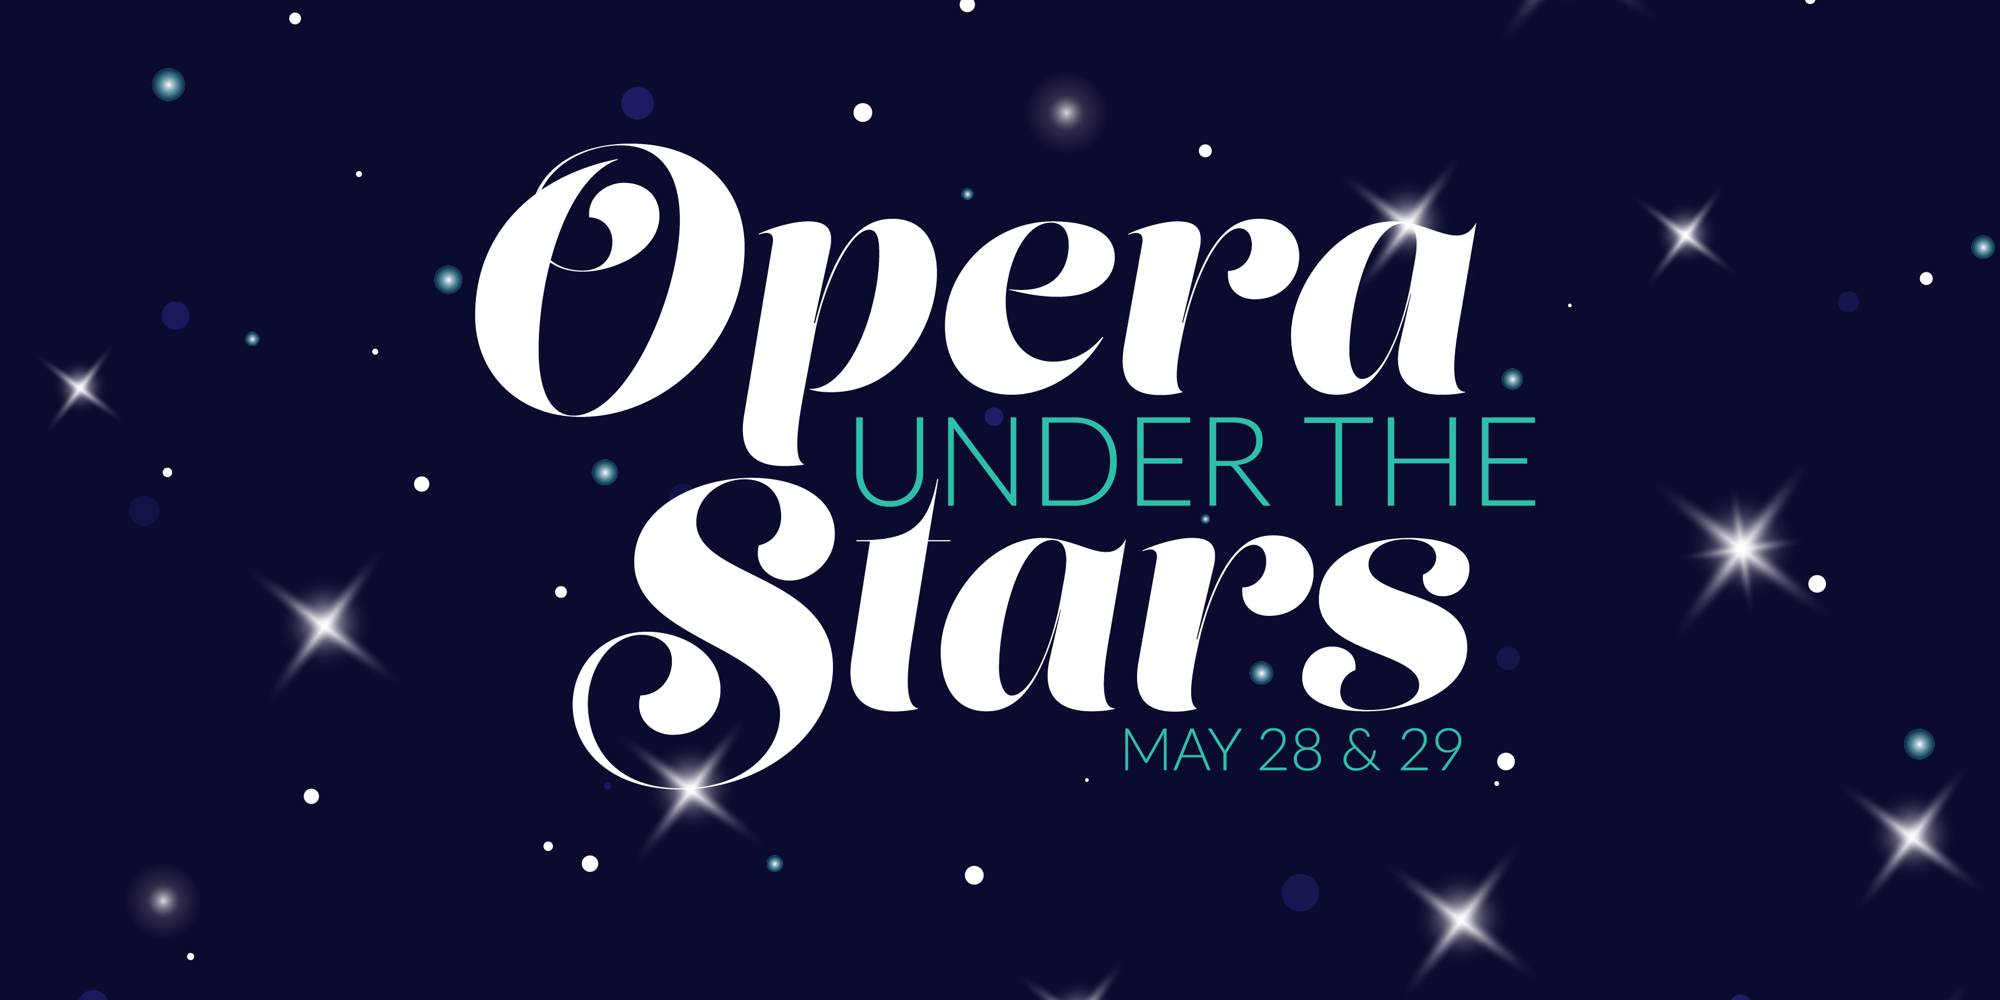 Opera Under the Stars promotional image